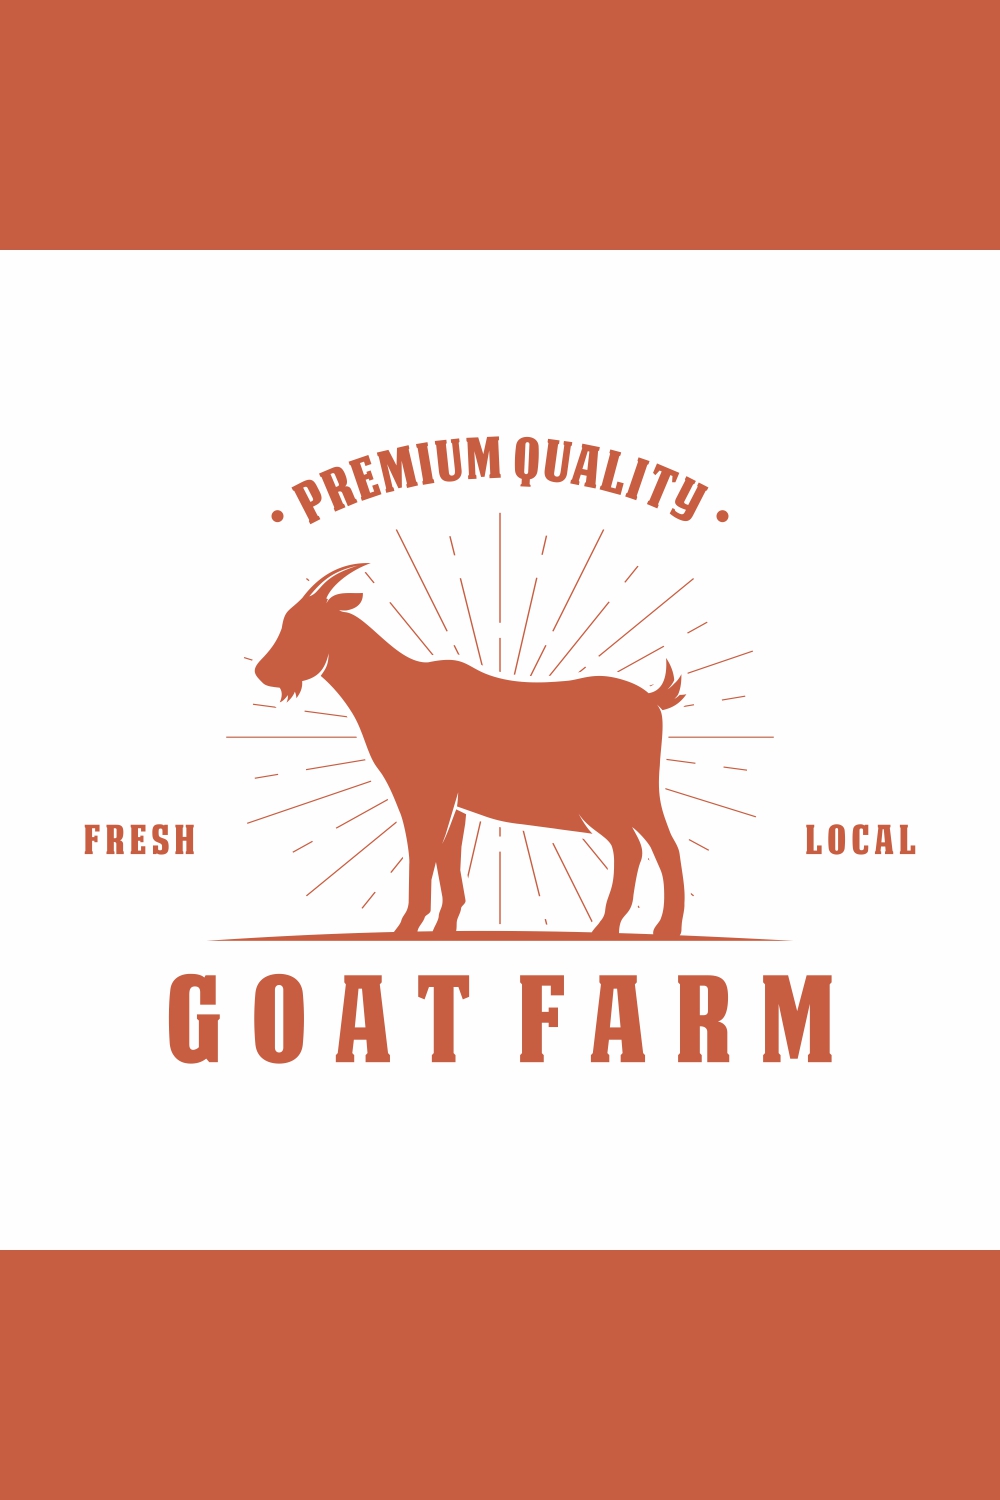 Goat Farm logo design - only 5$ pinterest preview image.